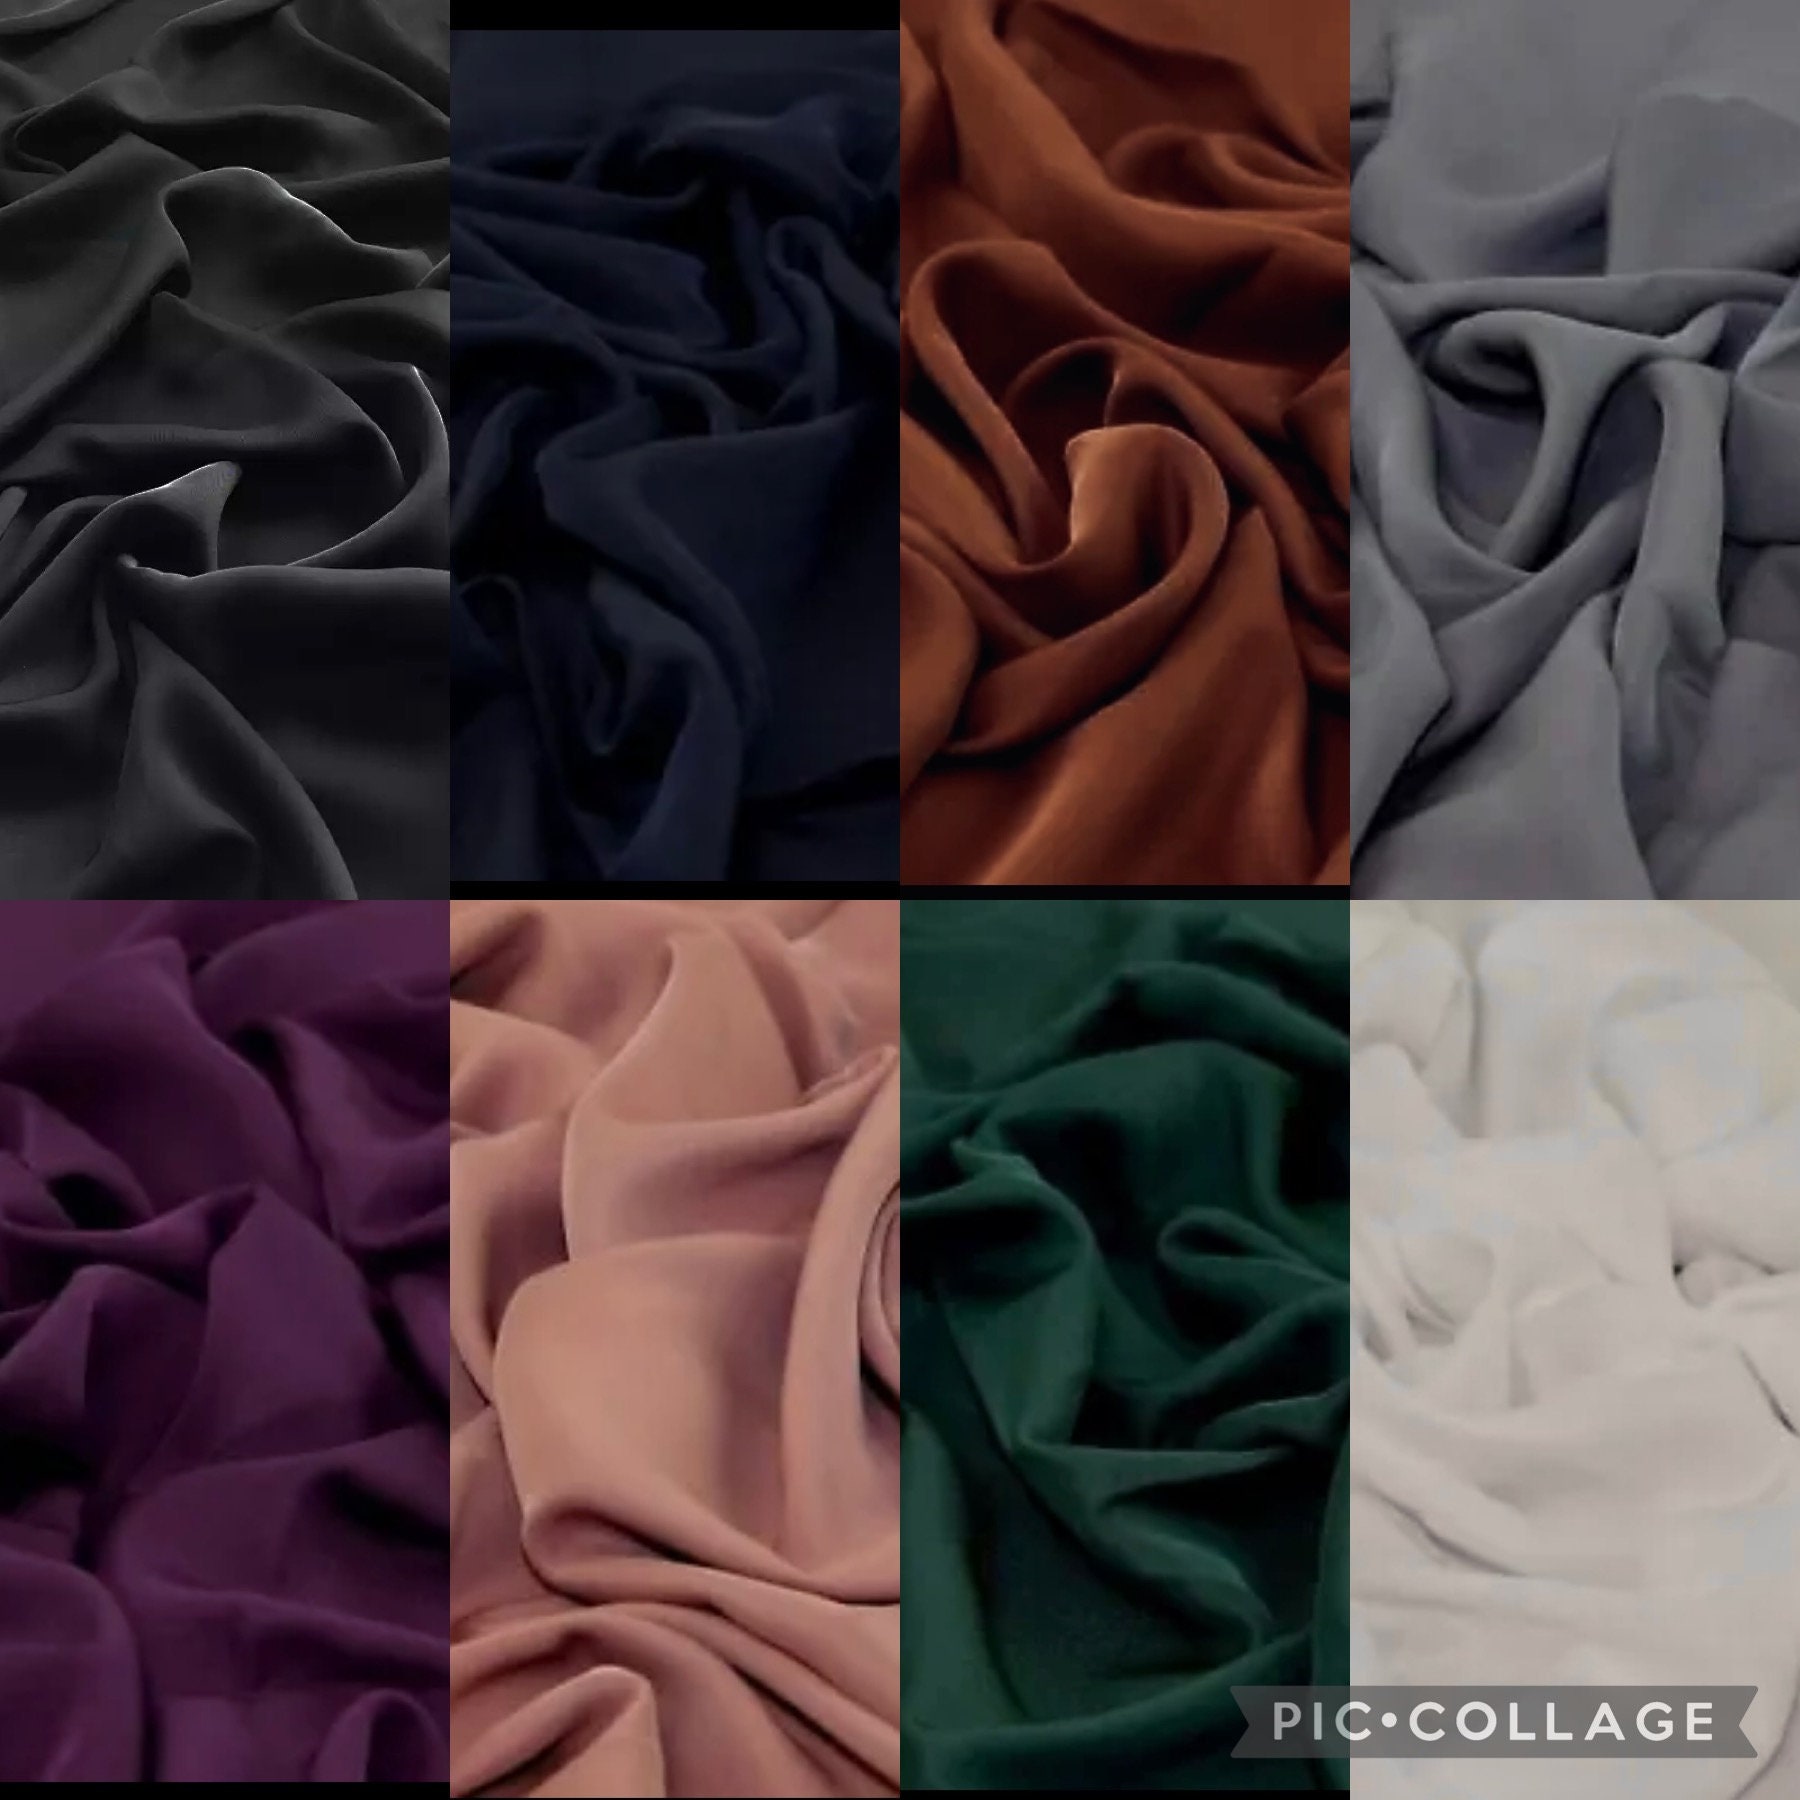 1m purple crepe georgette chiffon dress fabric 58 wide